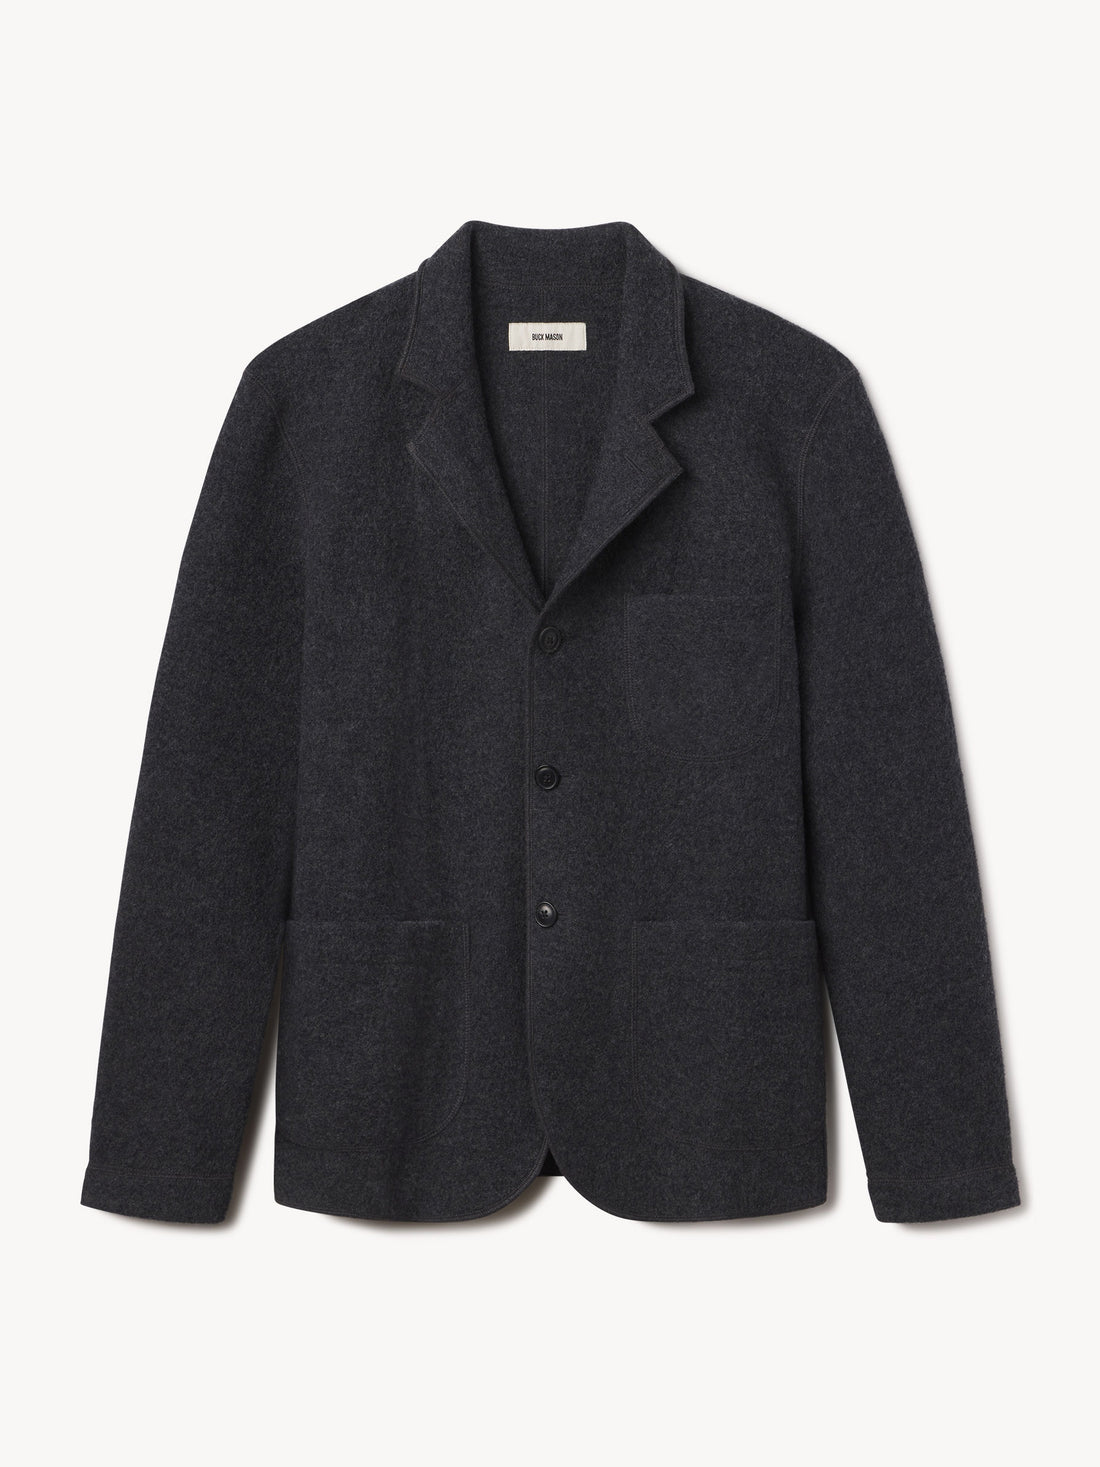 Men’s Vintage Style Jackets & Coats 1920s-1970s Chore Jacket |  Buck Mason  AT vintagedancer.com